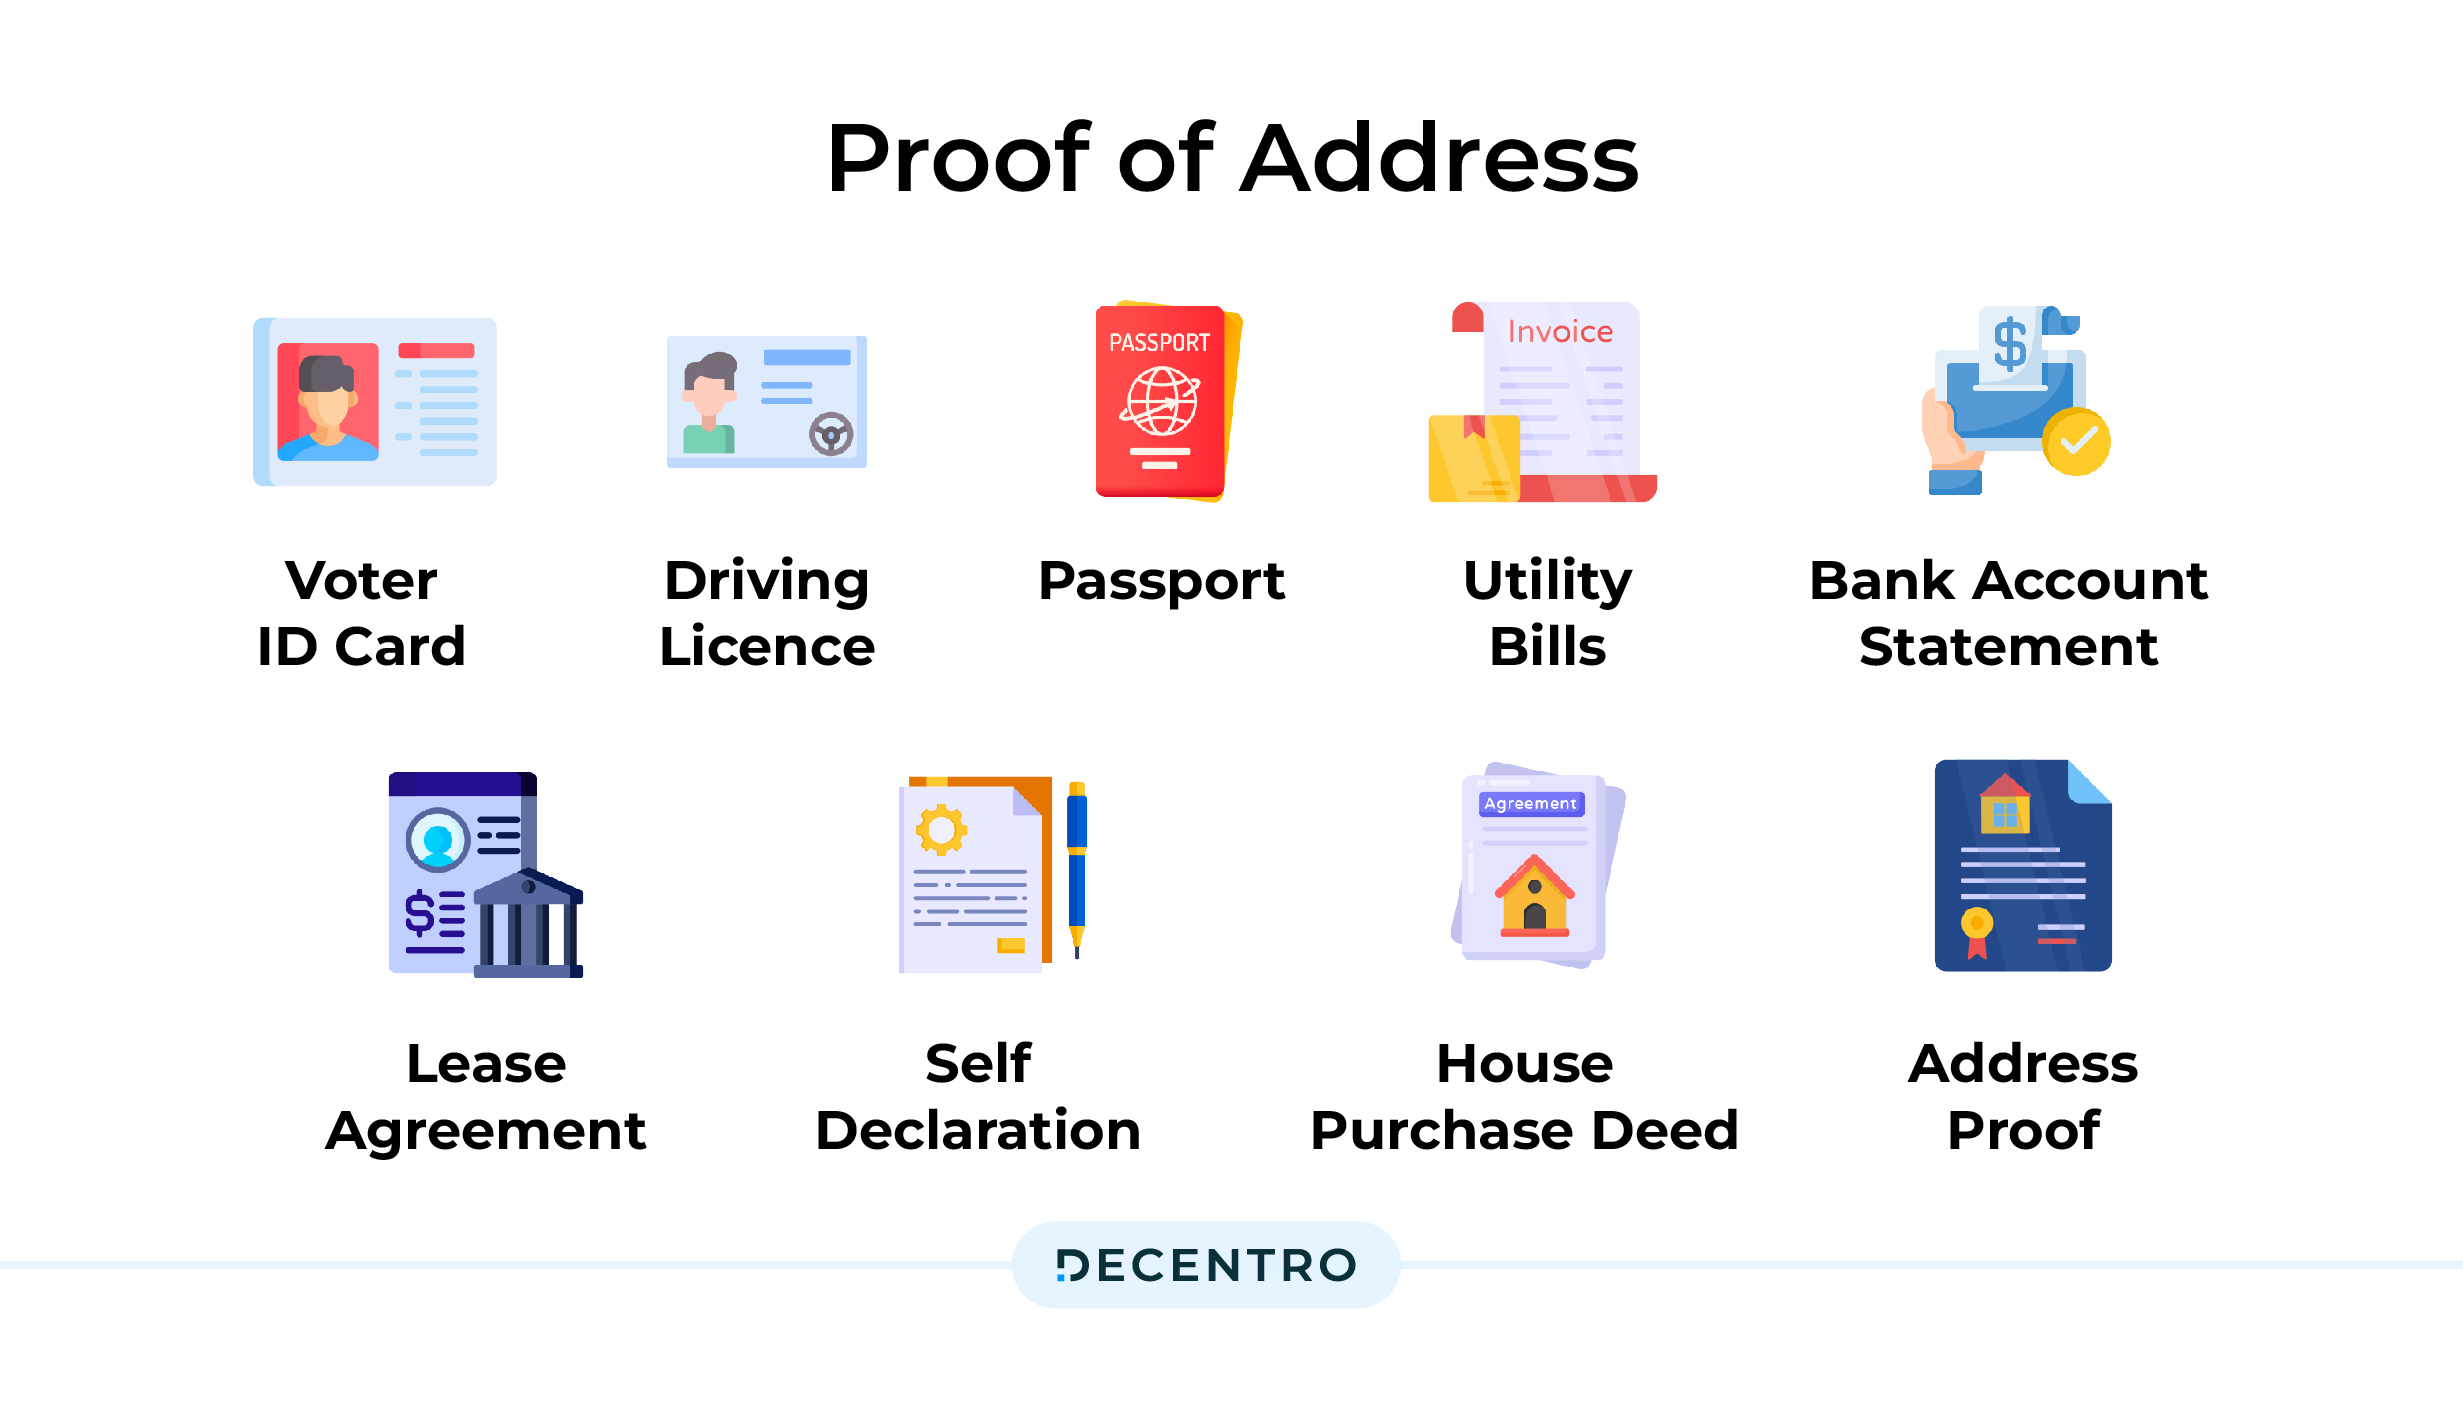 List of Documents - Proof of Address